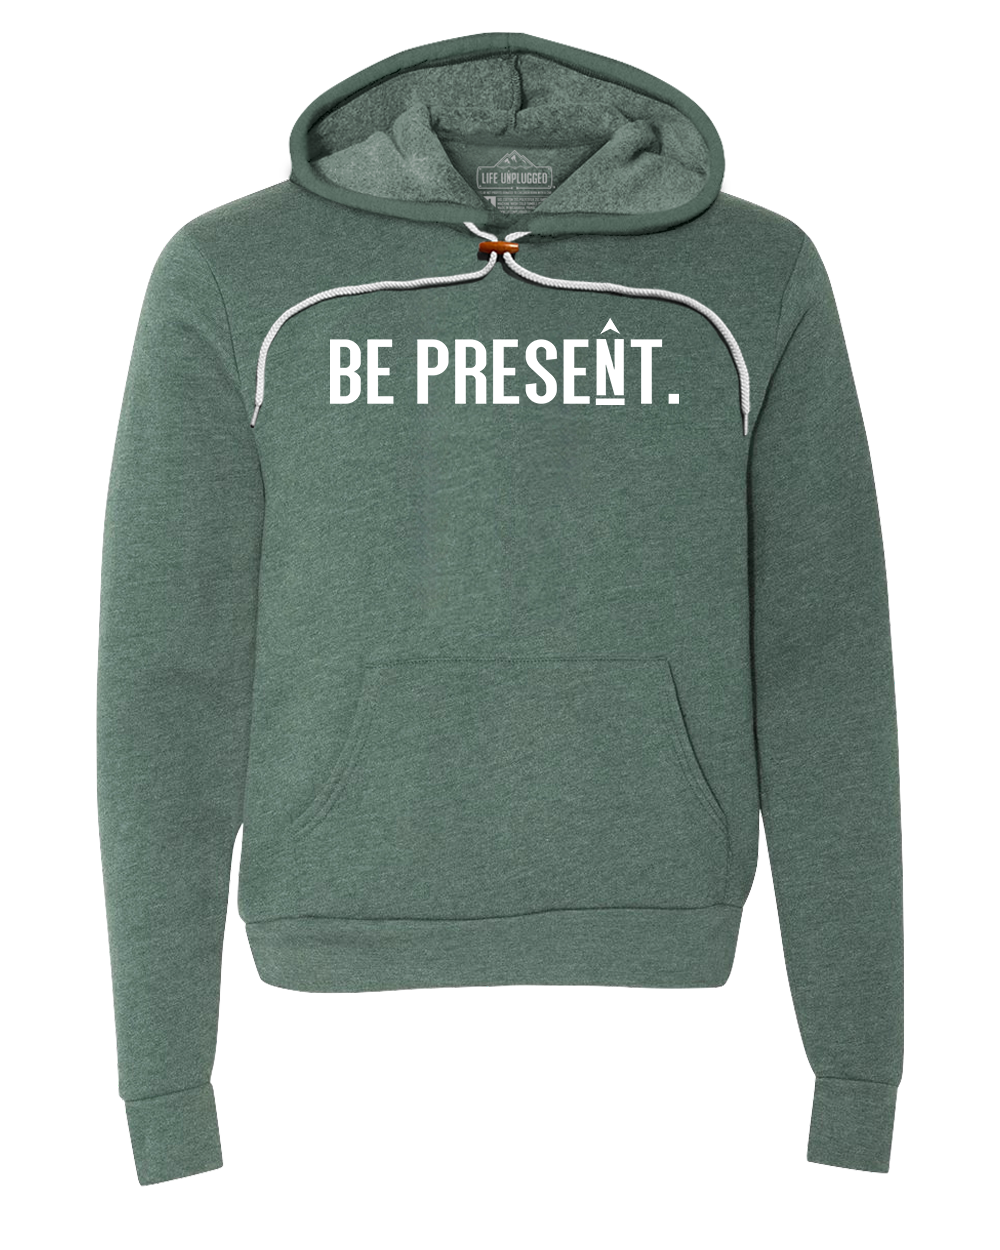 BE PRESENT. Full Chest Premium Super Soft Hooded Sweatshirt